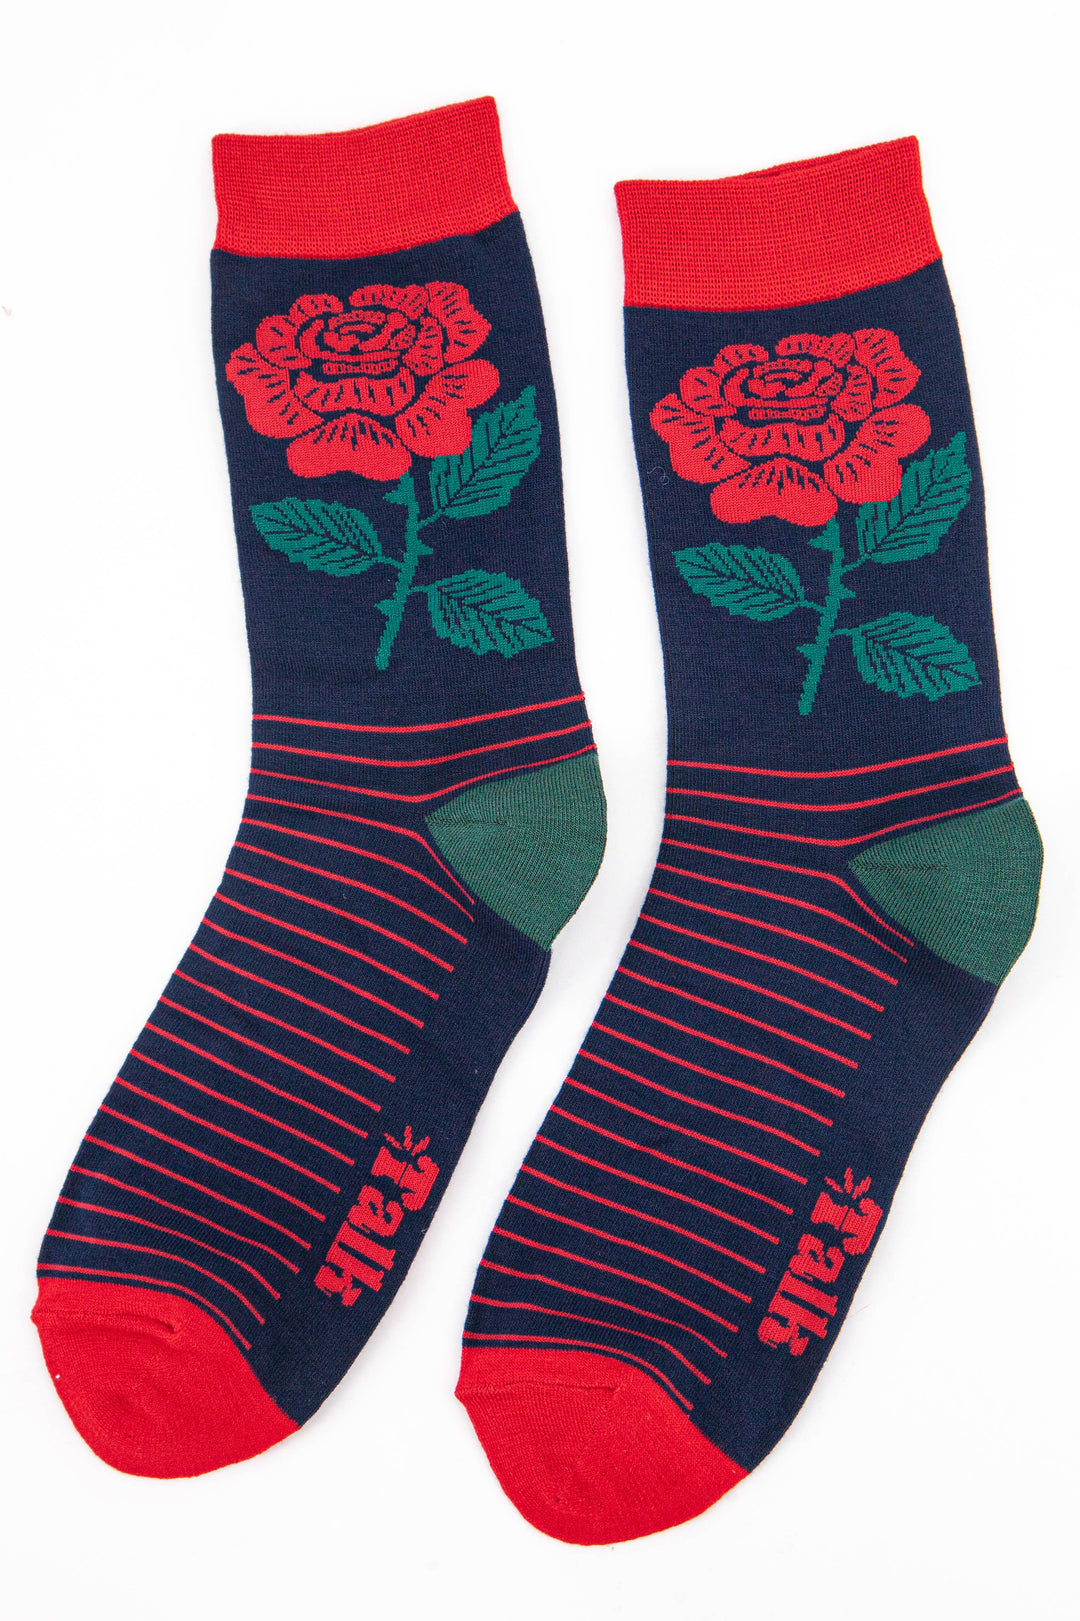 mens novelty dress socks featuring an english rose